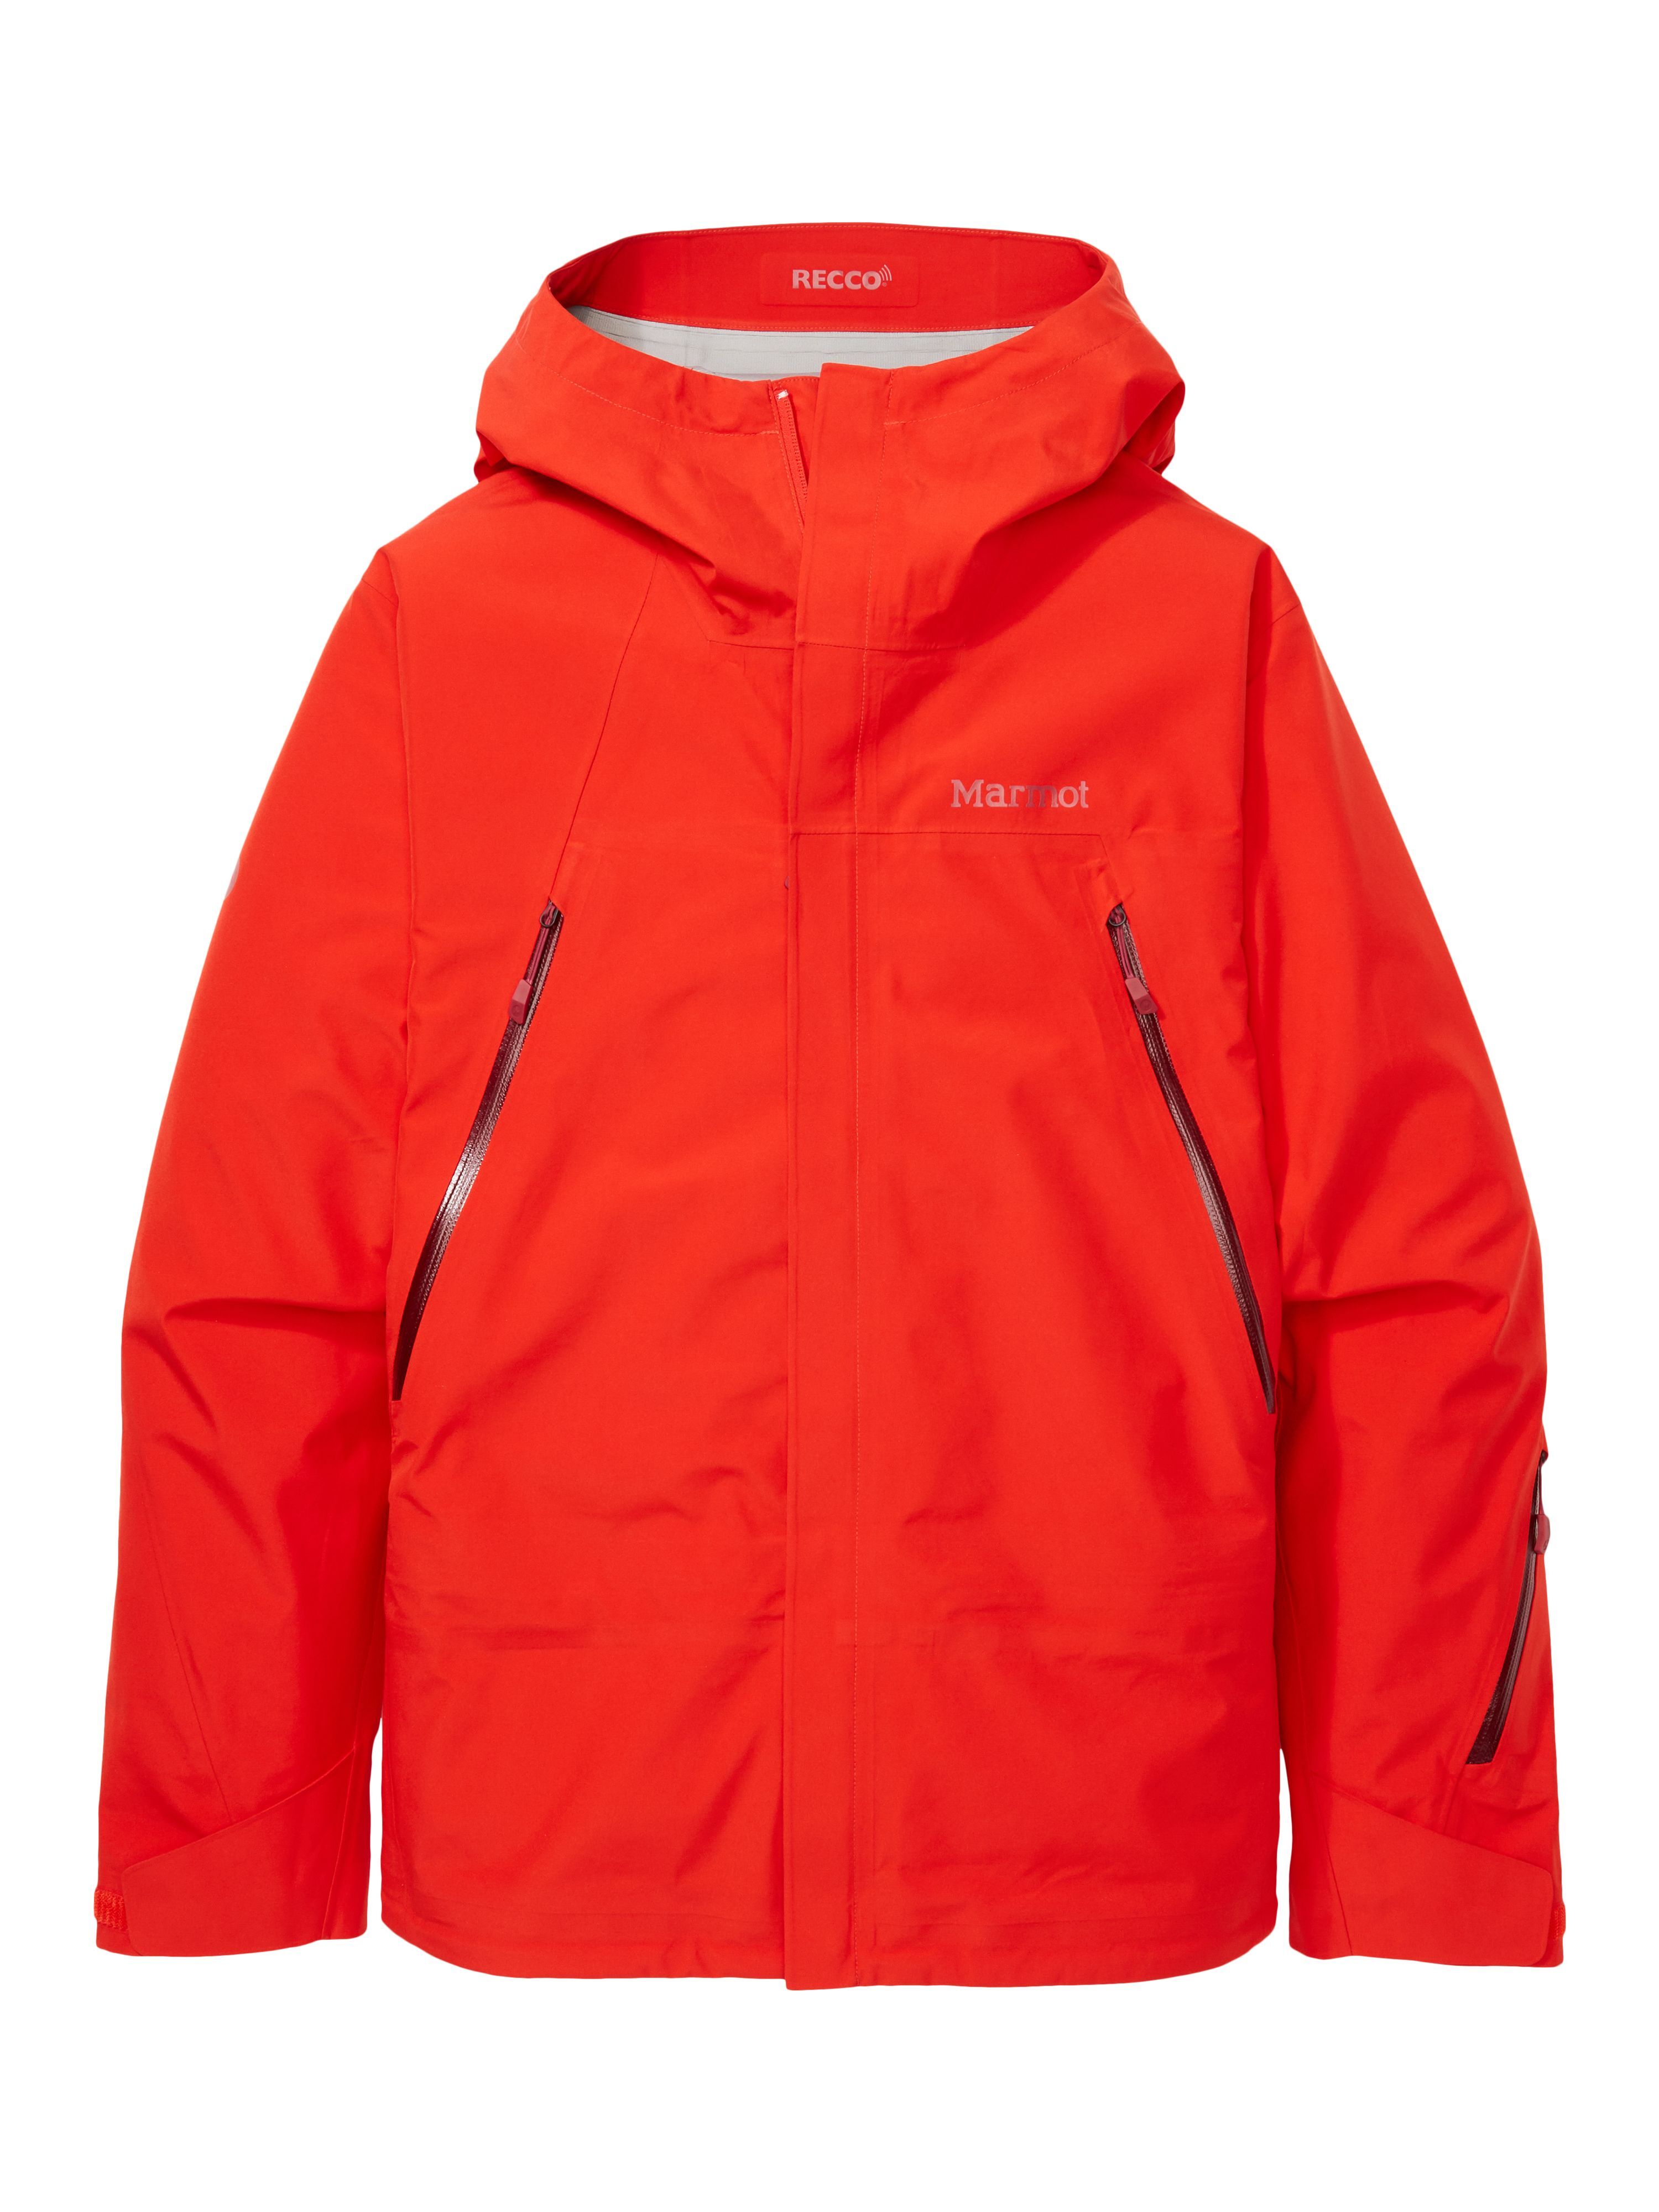 Marmot Spire Jacket - Ski jacket - Men's